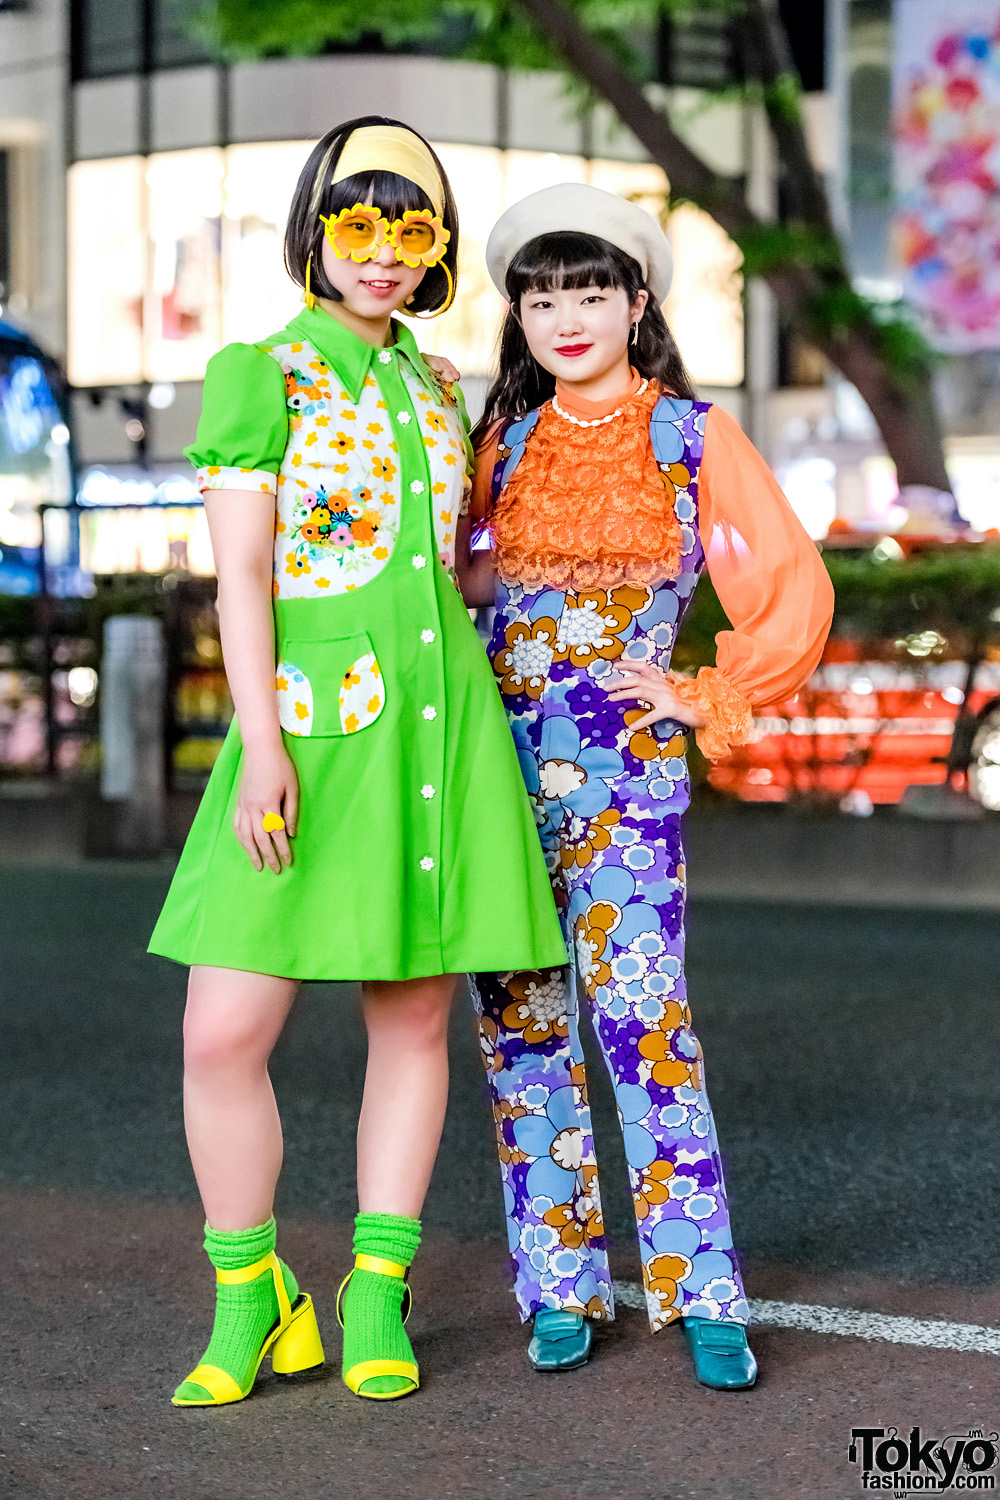 Colorful Retro-Vintage Floral Harajuku Street Fashion w/ Flower Glasses & Neon Socks